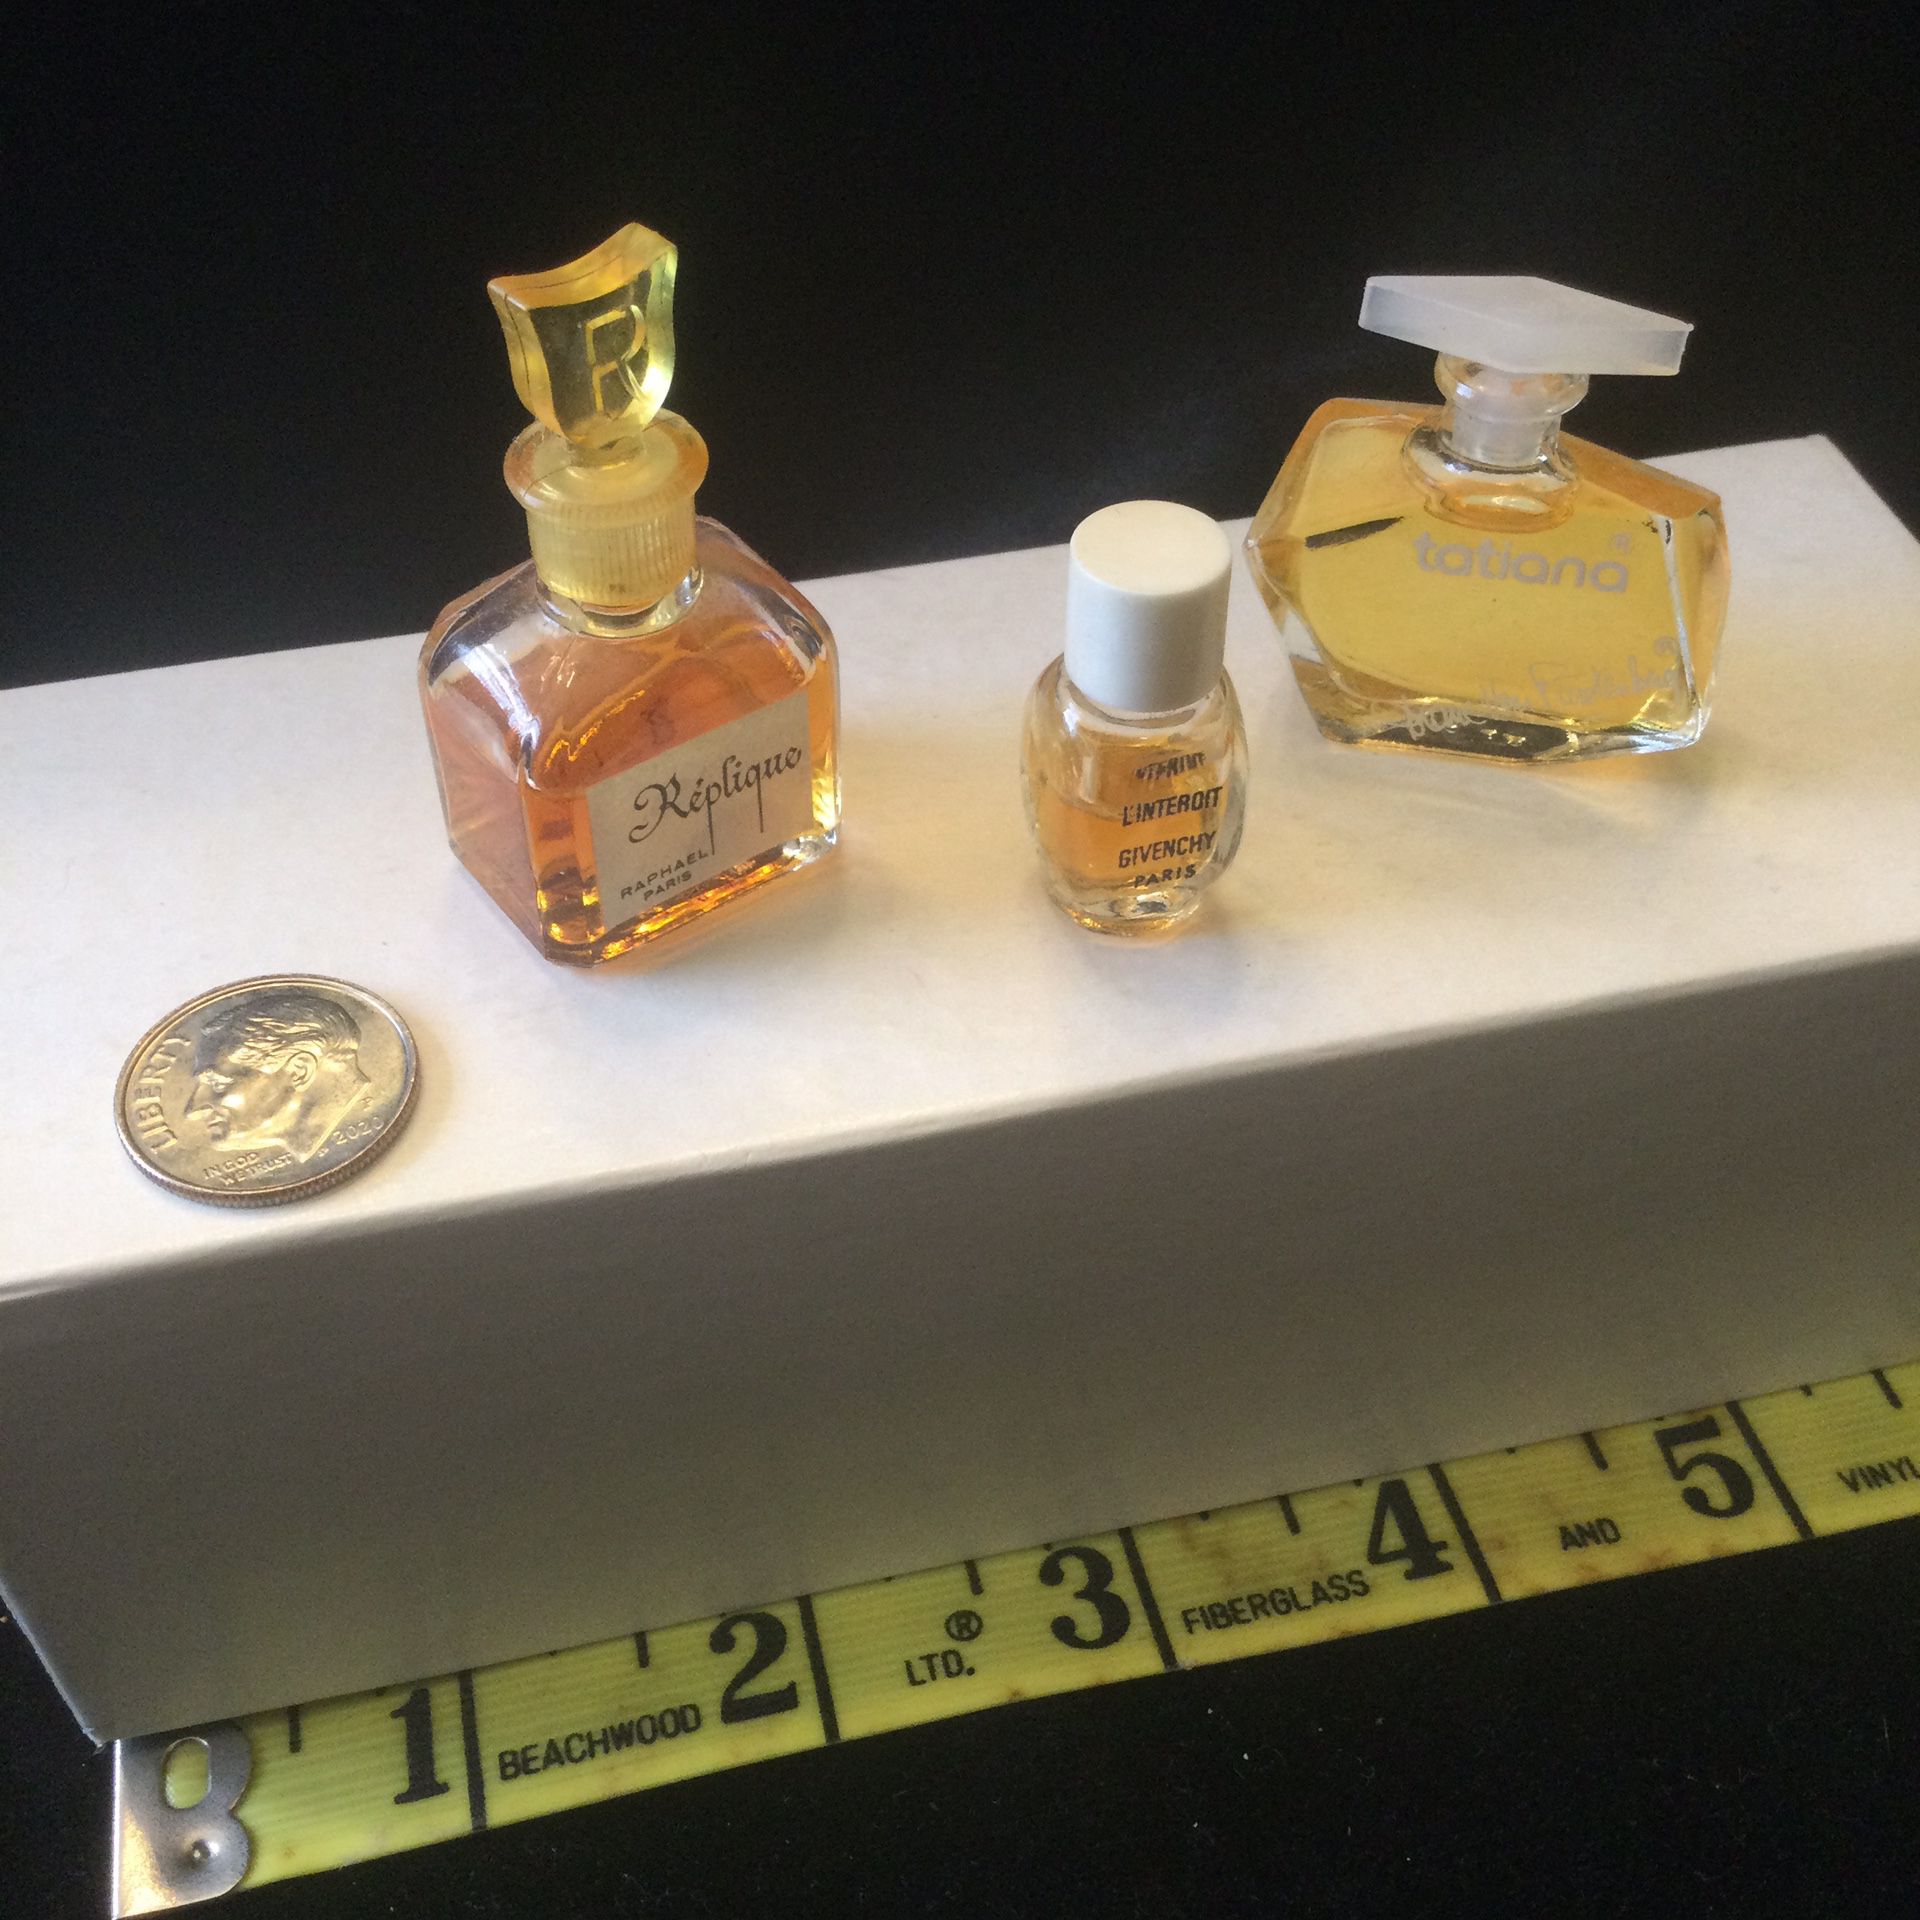 Vtg 1970’s  Perfume Bottles Collectible Minis - Replique, L’interdit, Tatiana